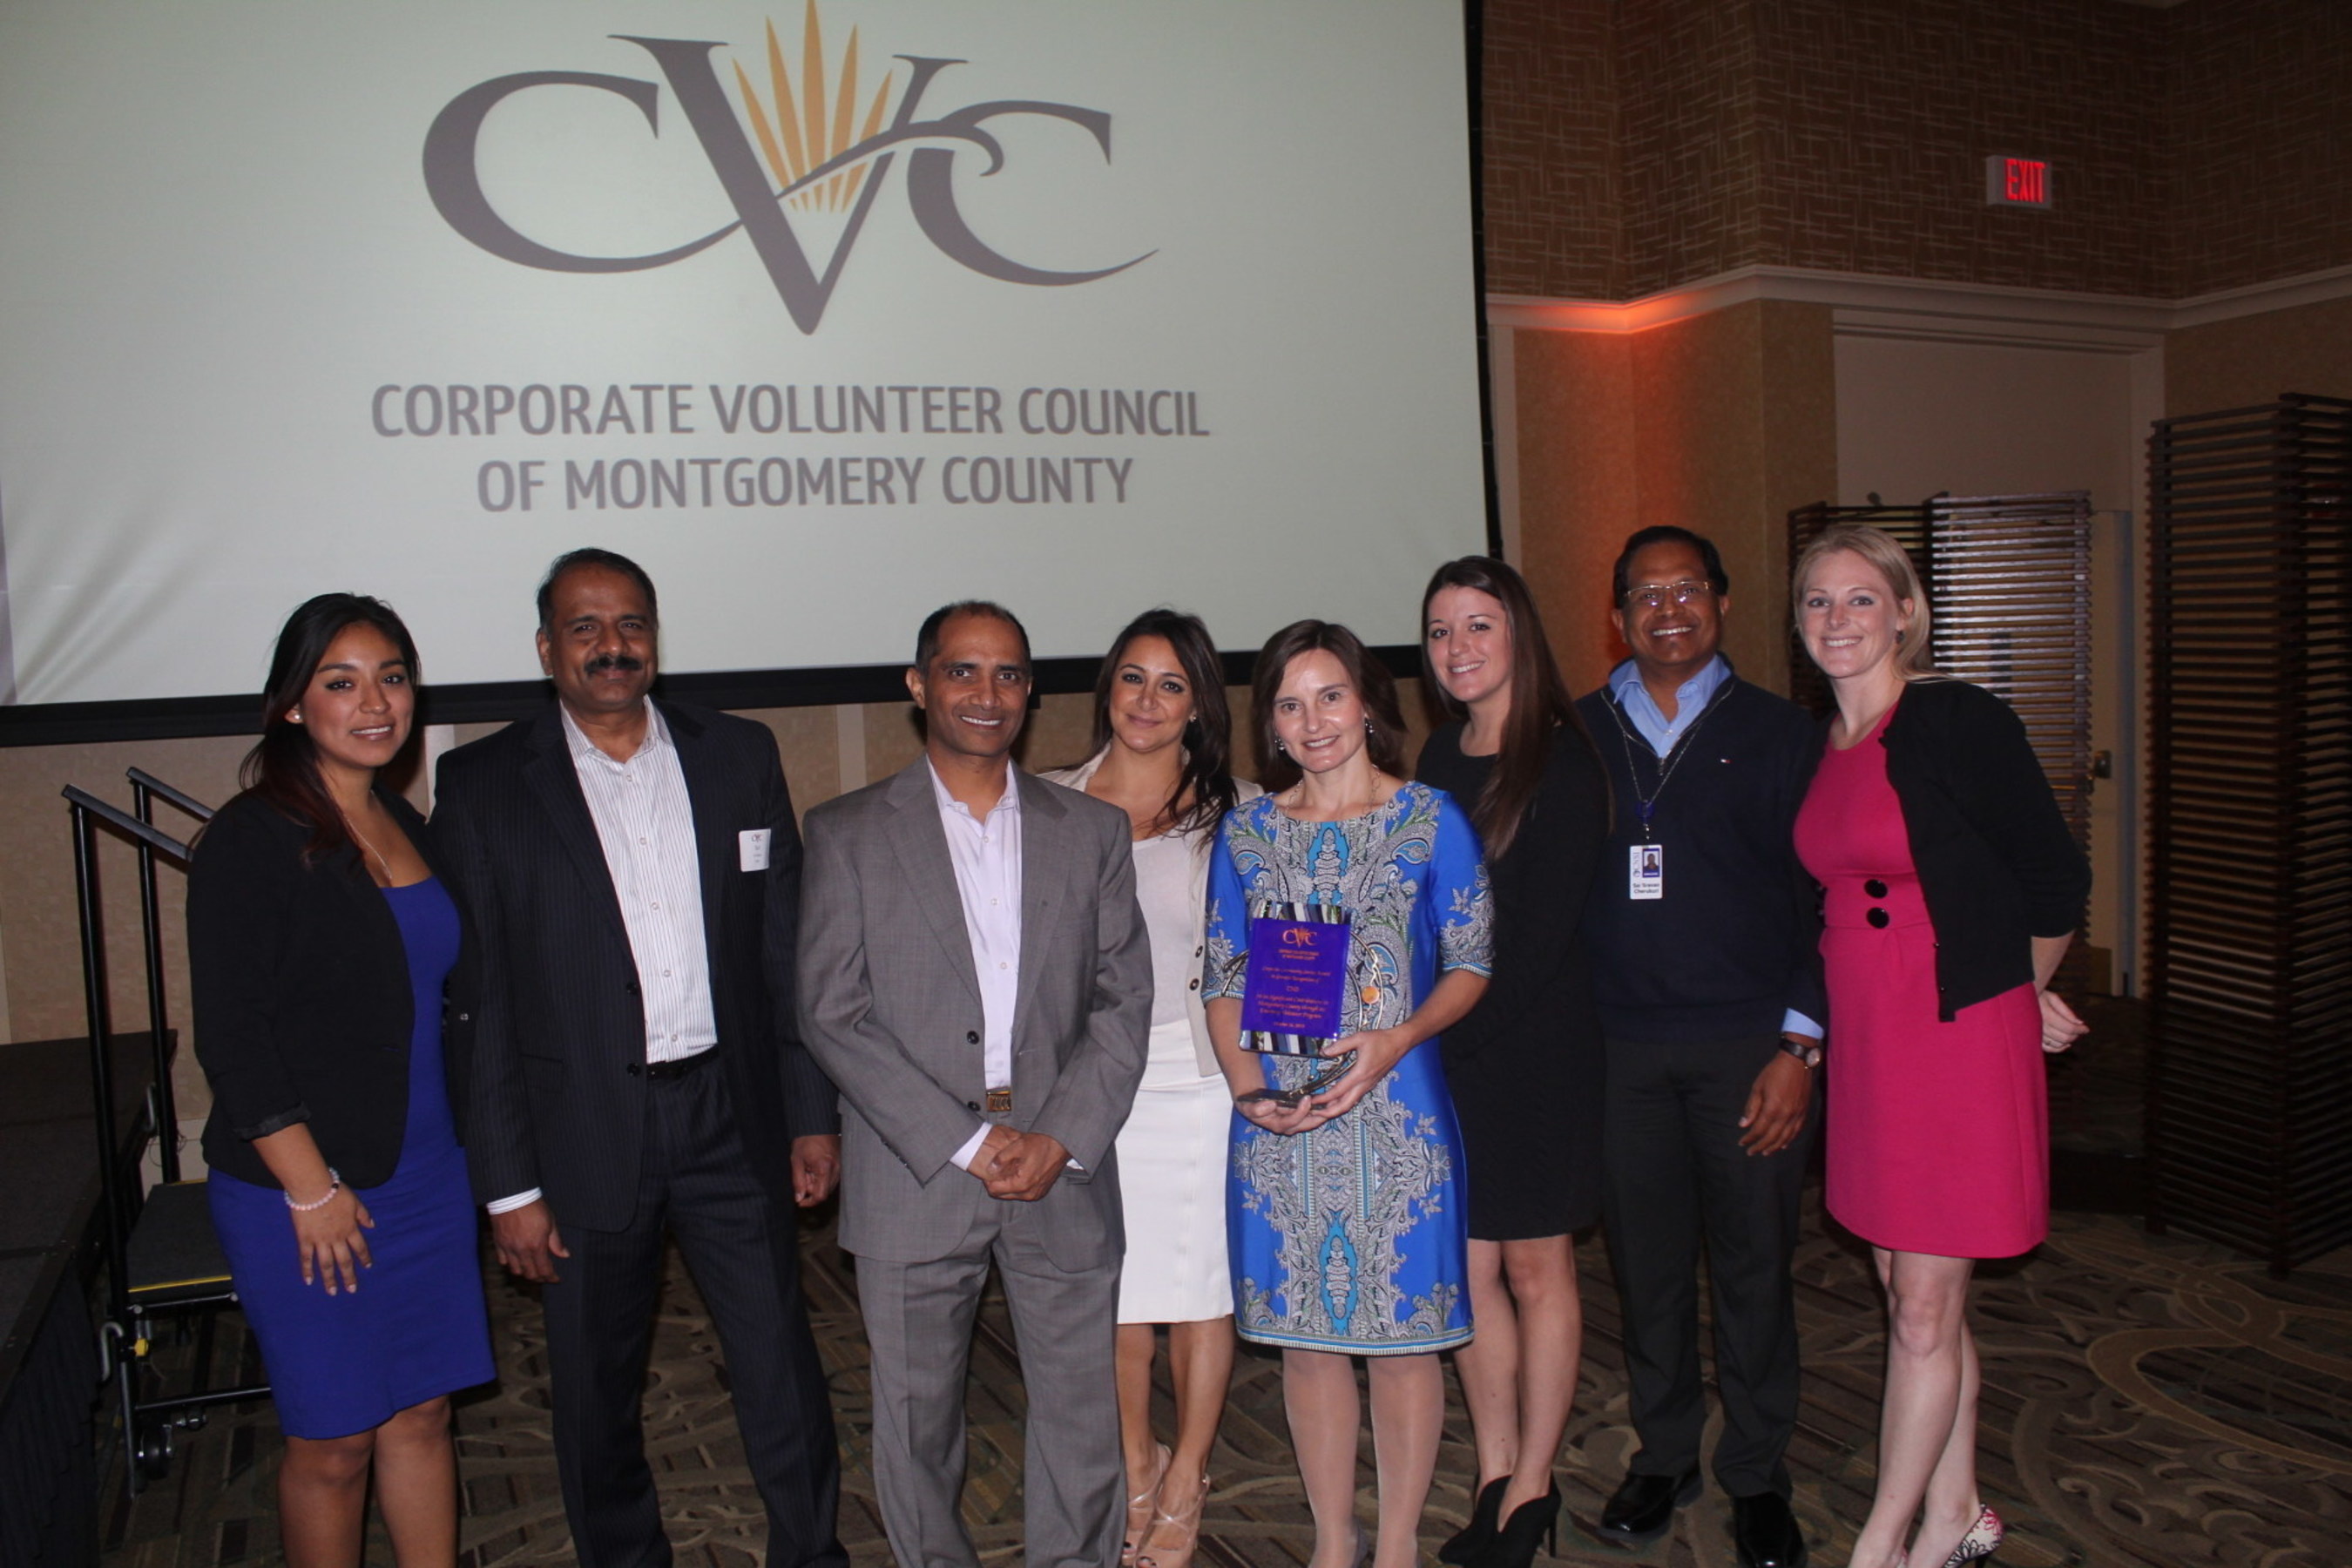 CNSI employees Evelyn Barrenechea, Sri Akula, Vivek Gore, Maya Chavez, Tara Weyer, Heather Guzman, Sai Cherukuri, and Amanda Moskowitz attend the CVC Awards Ceremony